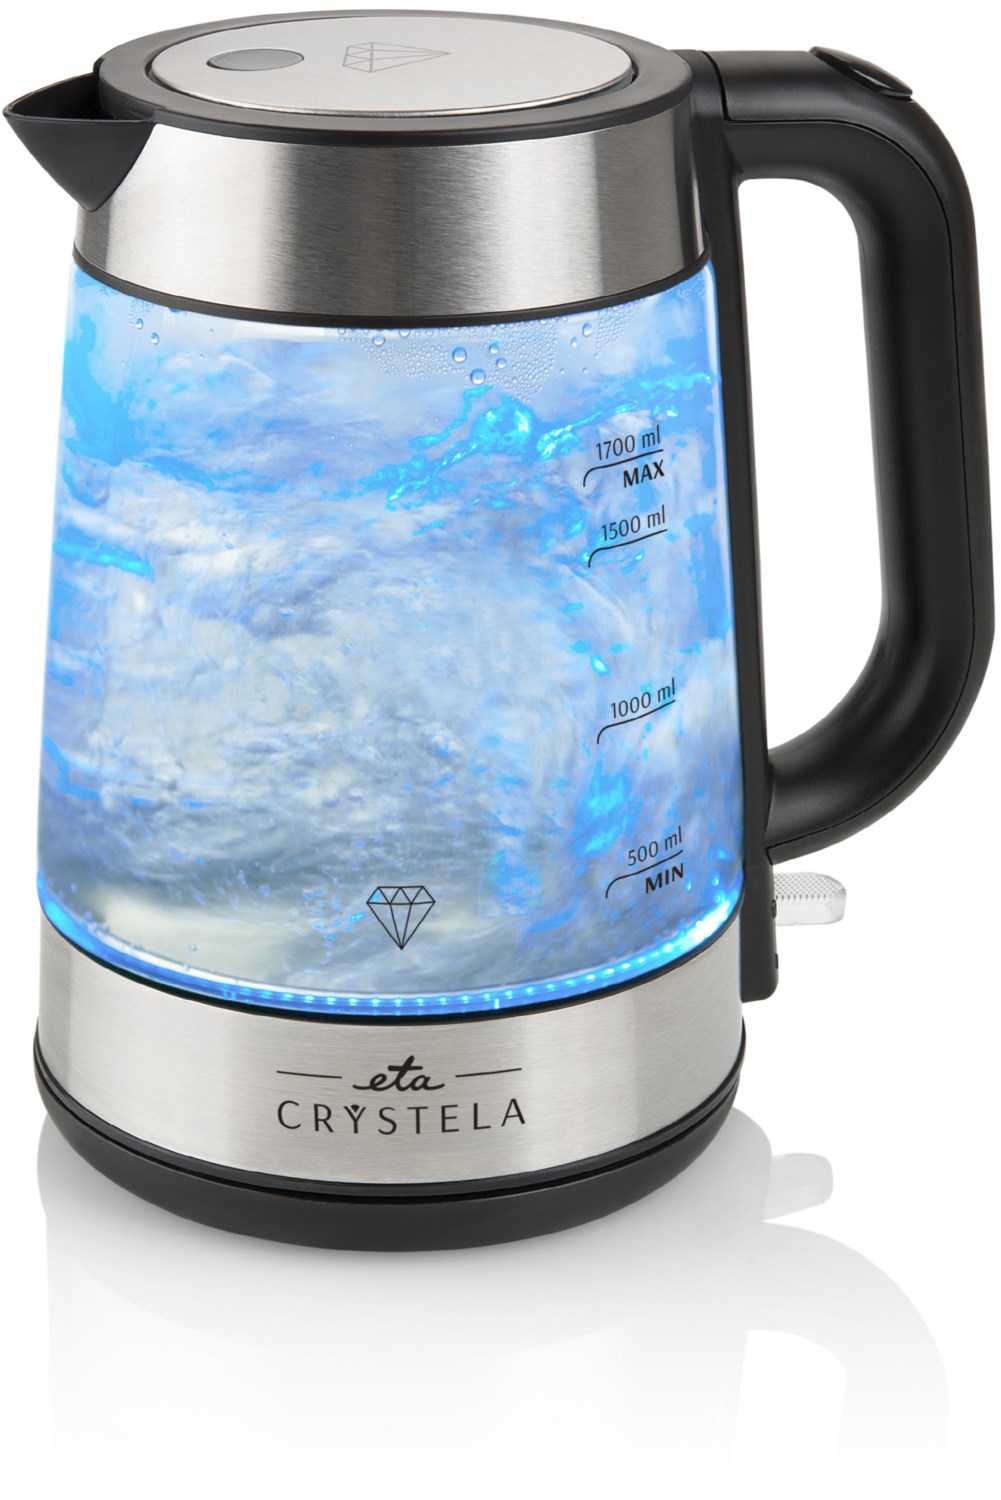 Crystela 6153 Wasserkocher glas/edelstahl